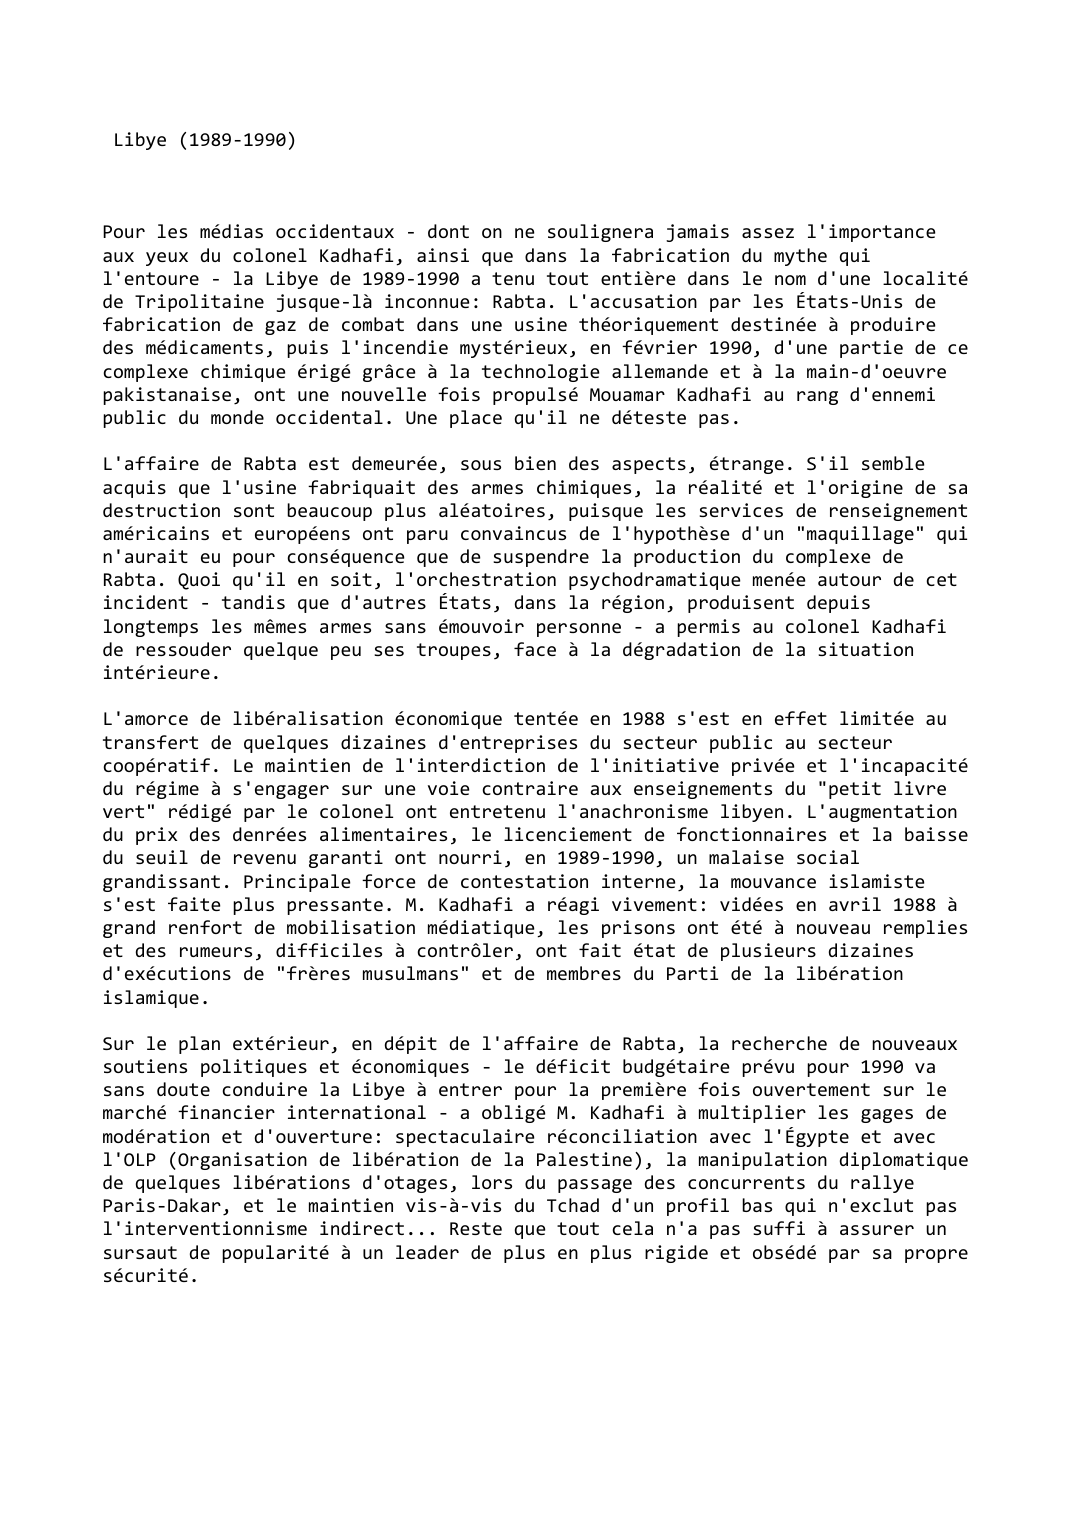 Prévisualisation du document Libye (1989-1990)